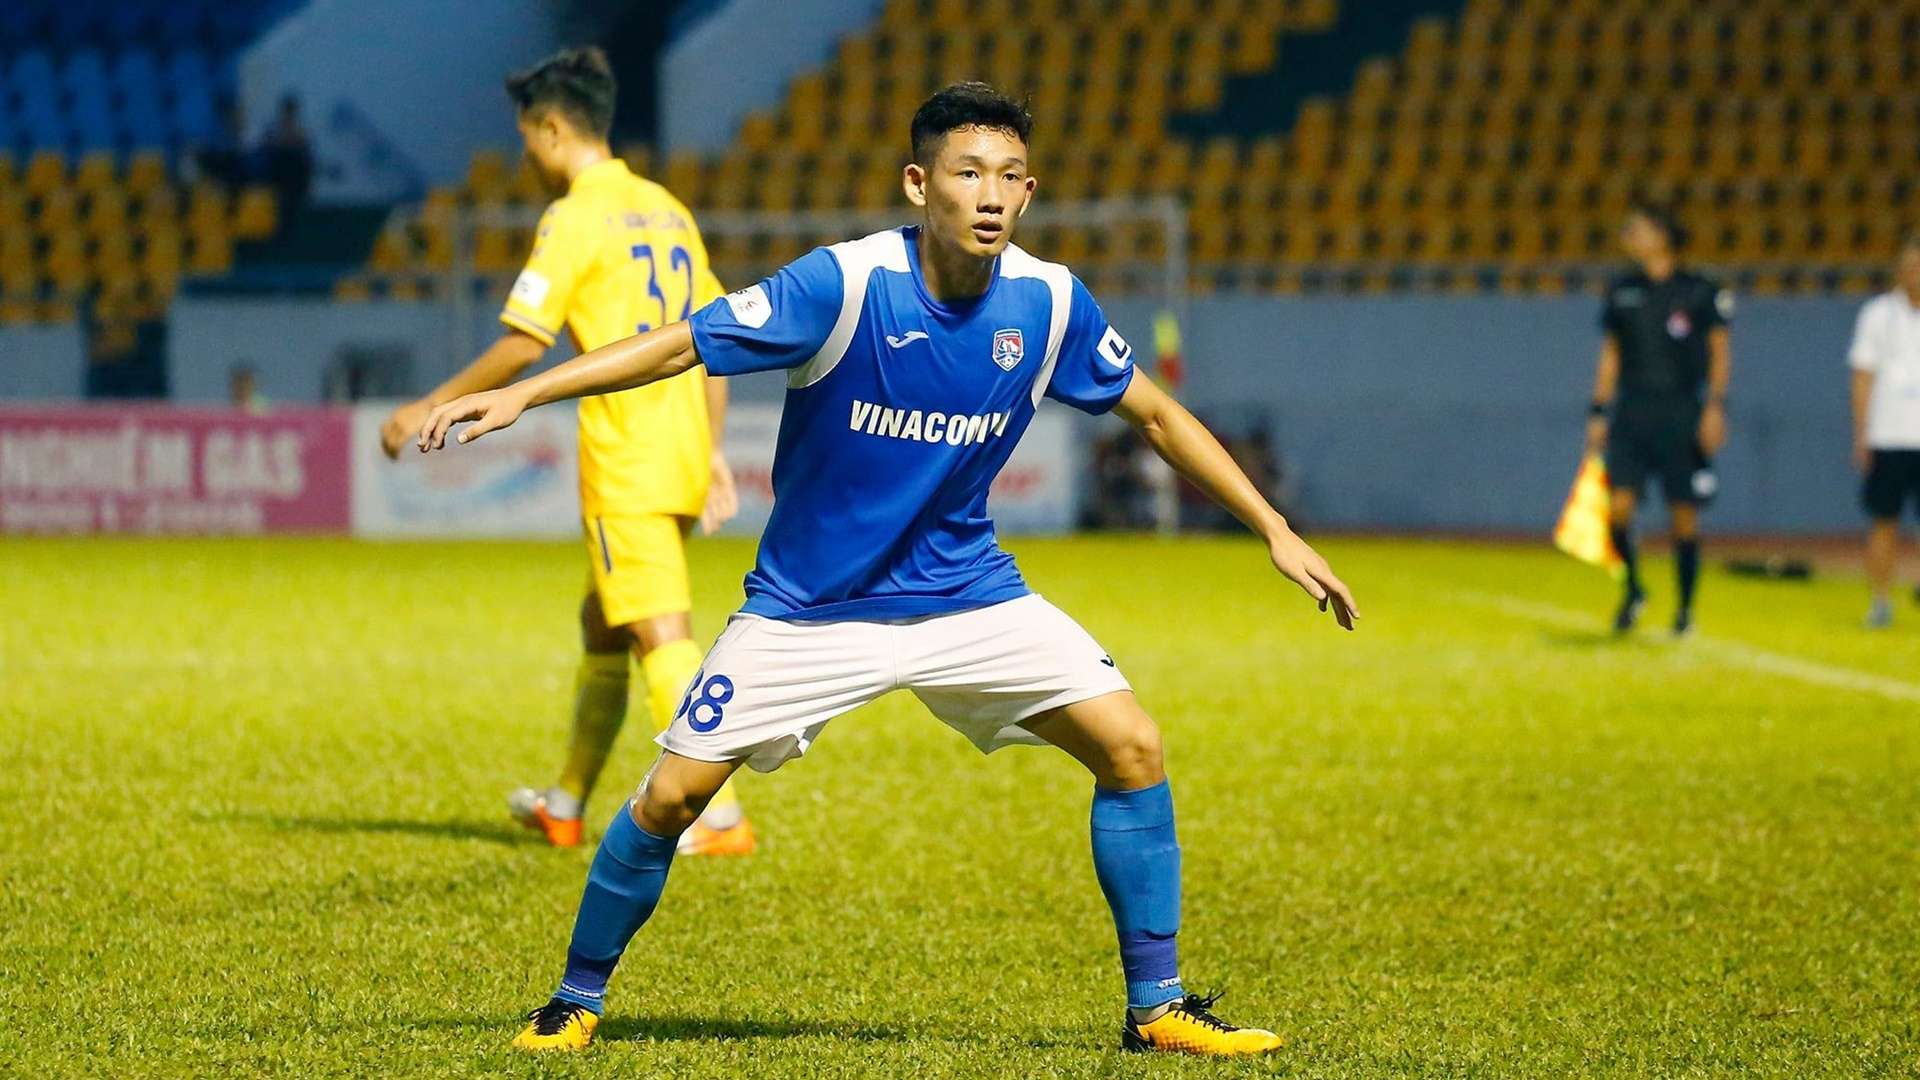 Nguyen Hai Long | Than Quang Ninh | V.League 2020